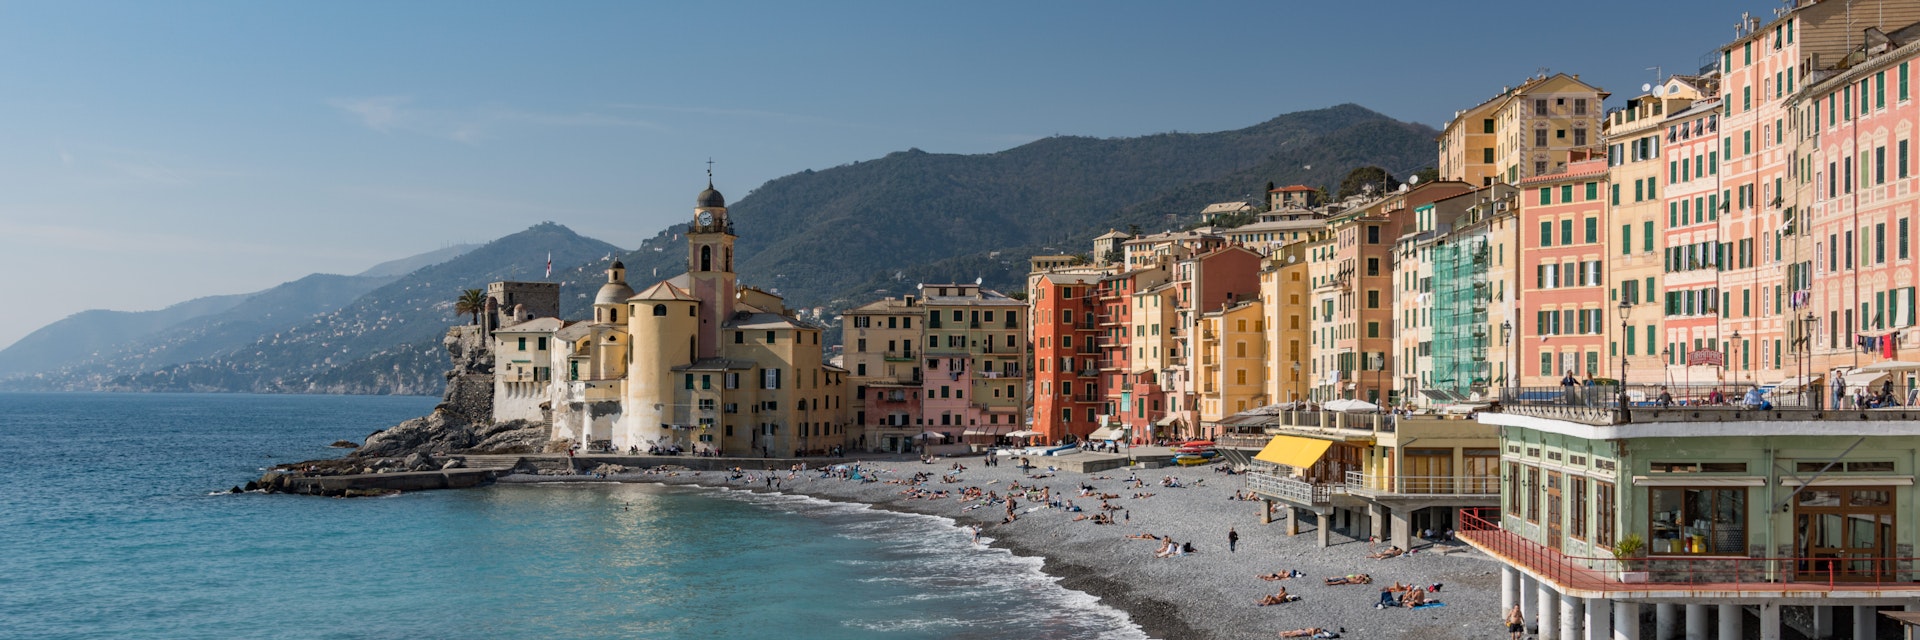 Camogli waterfront, Italian Riviera, Liguria, Italy.